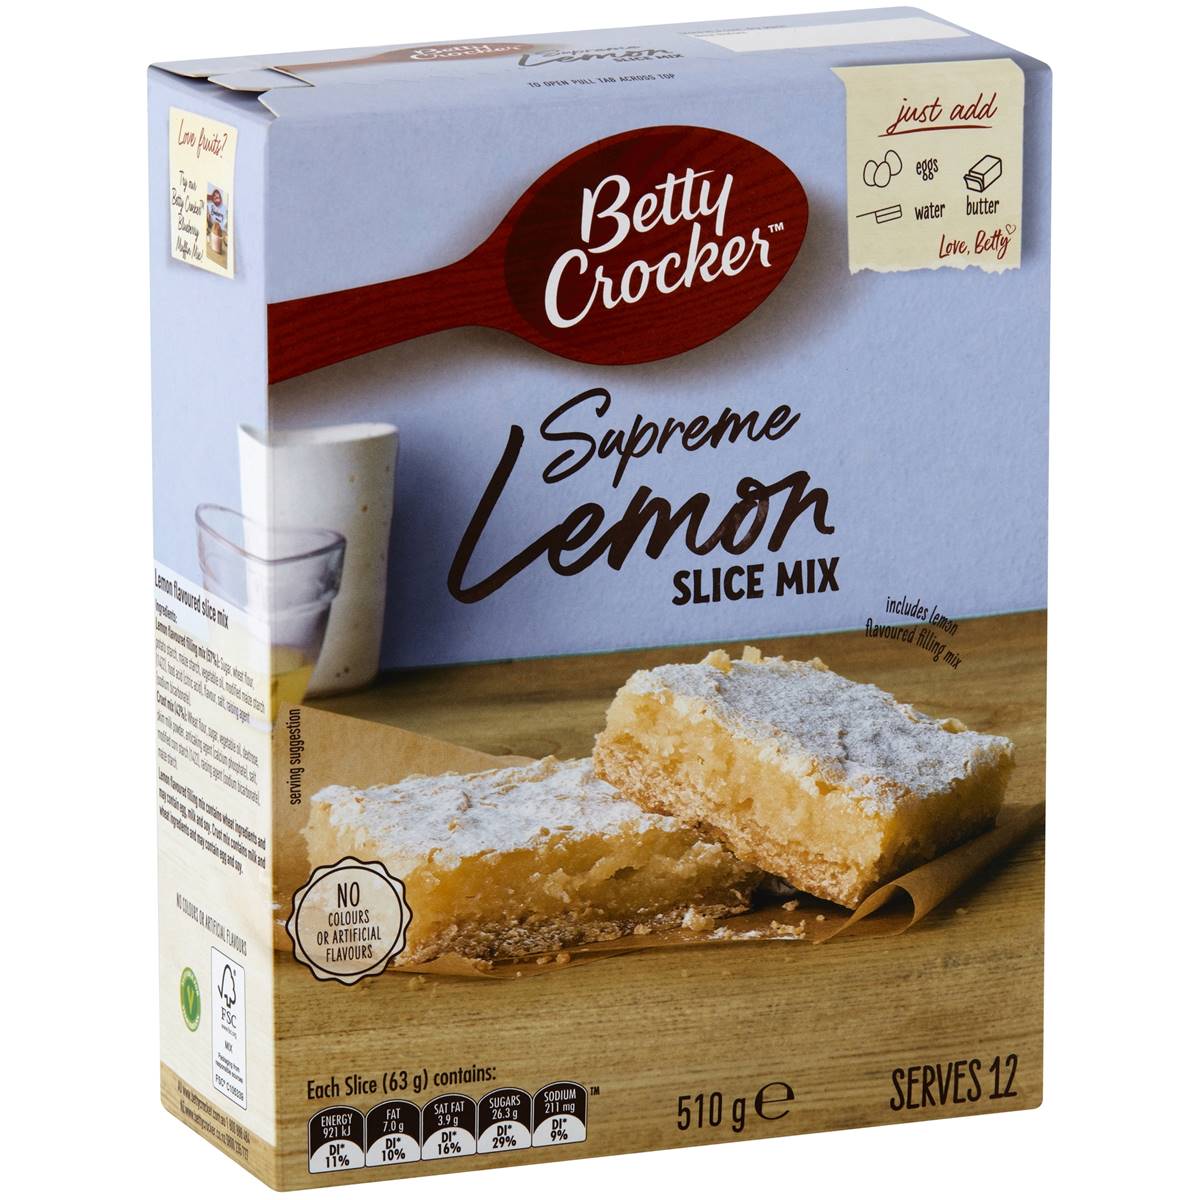 Calories in Betty Crocker Supreme Lemon Slice Mix Slice Mix